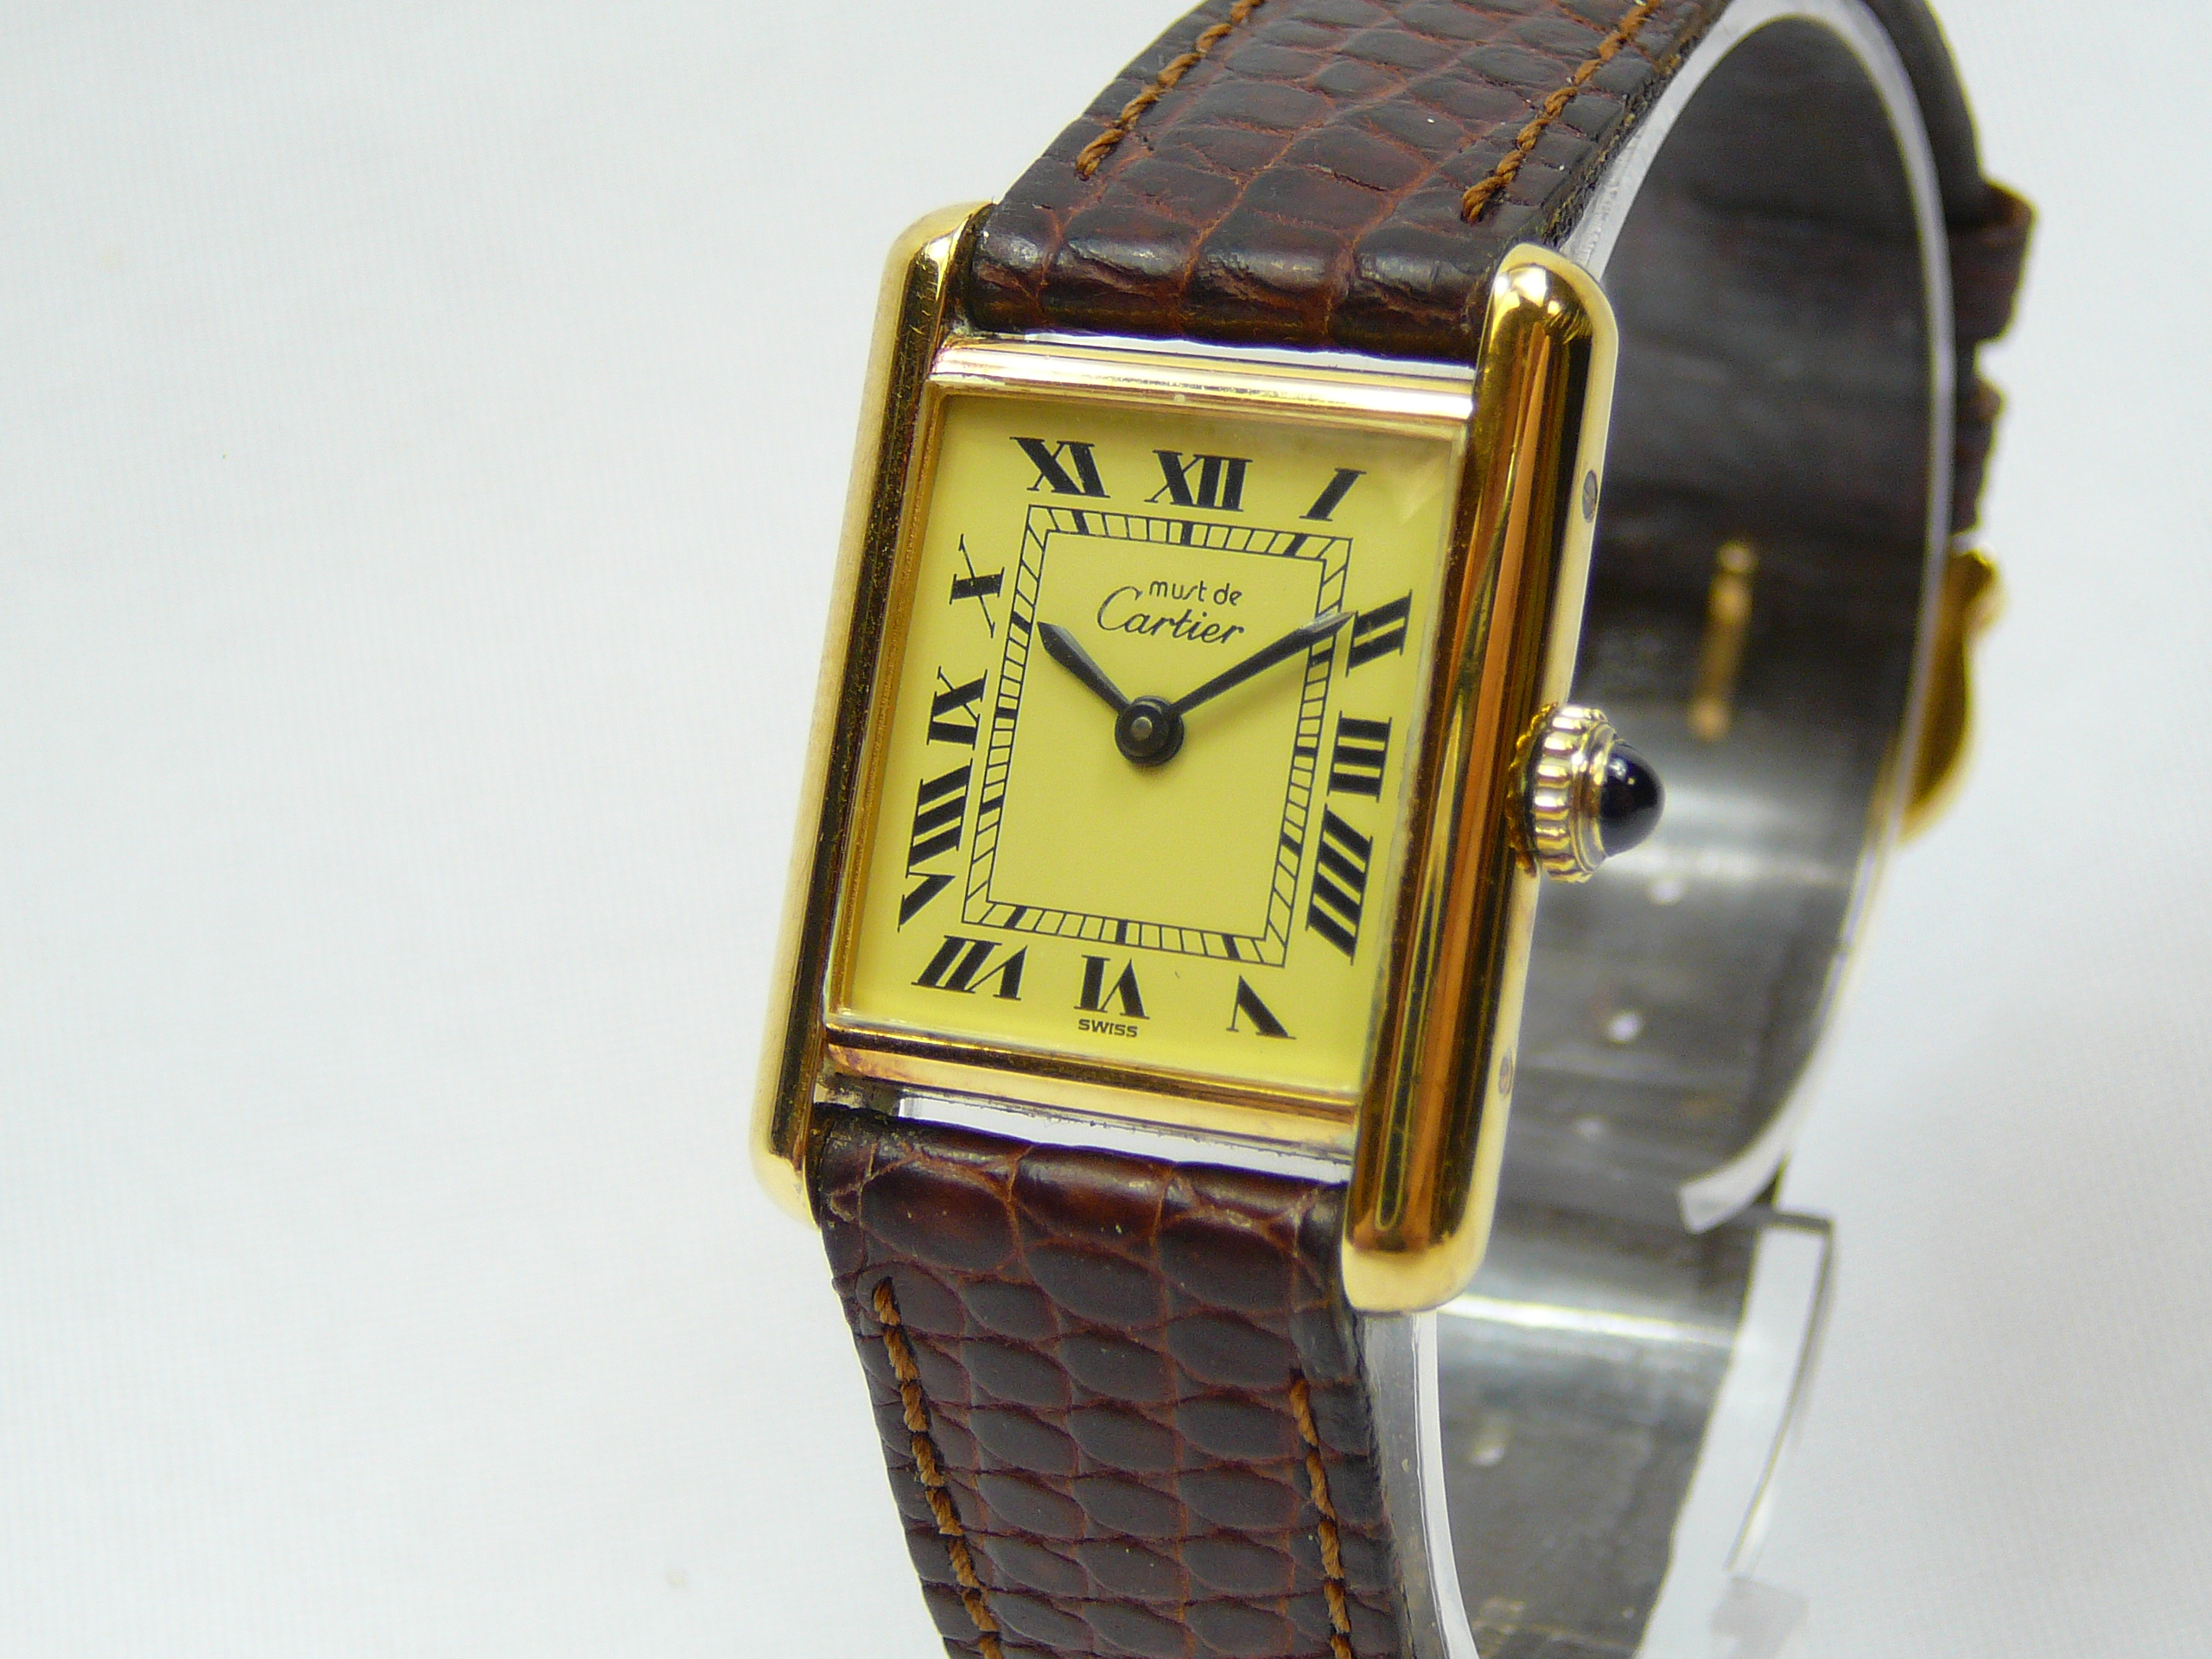 Ladies Cartier Gilt Silver Wrist Watch - Image 2 of 3